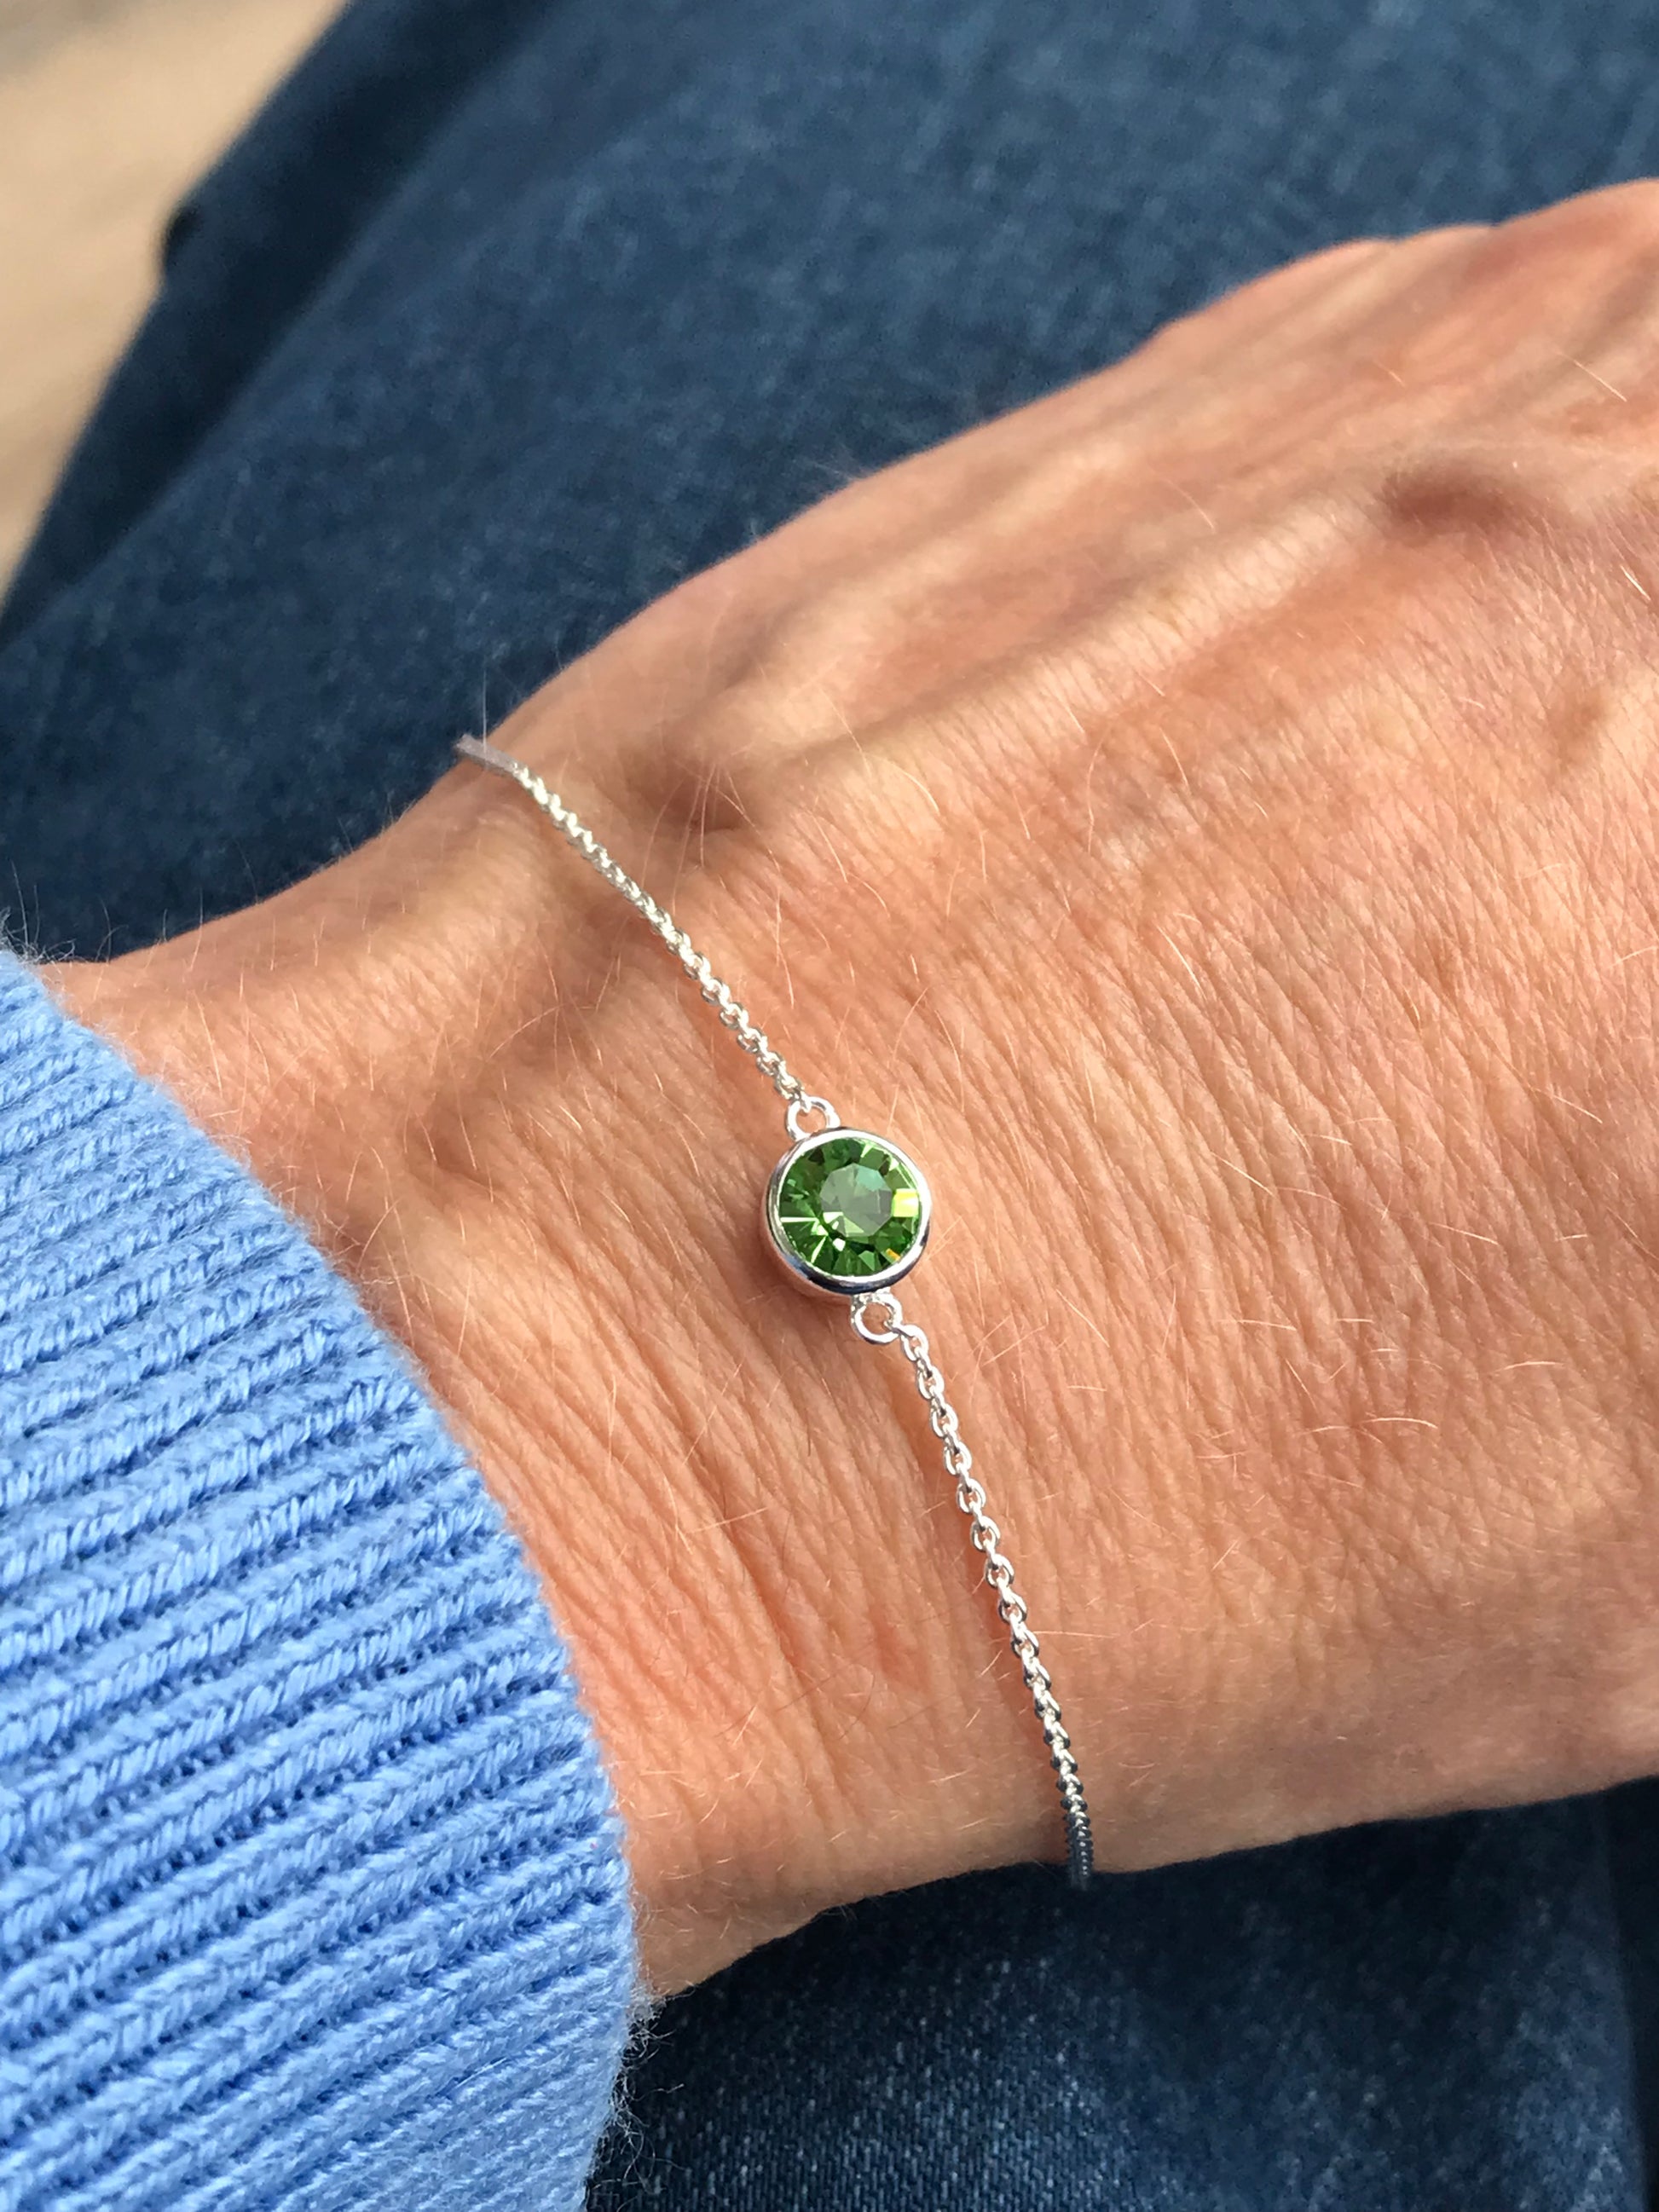 Silver Birthstone Bracelet With Crystal charm - Select Month Bracelet Gecko   